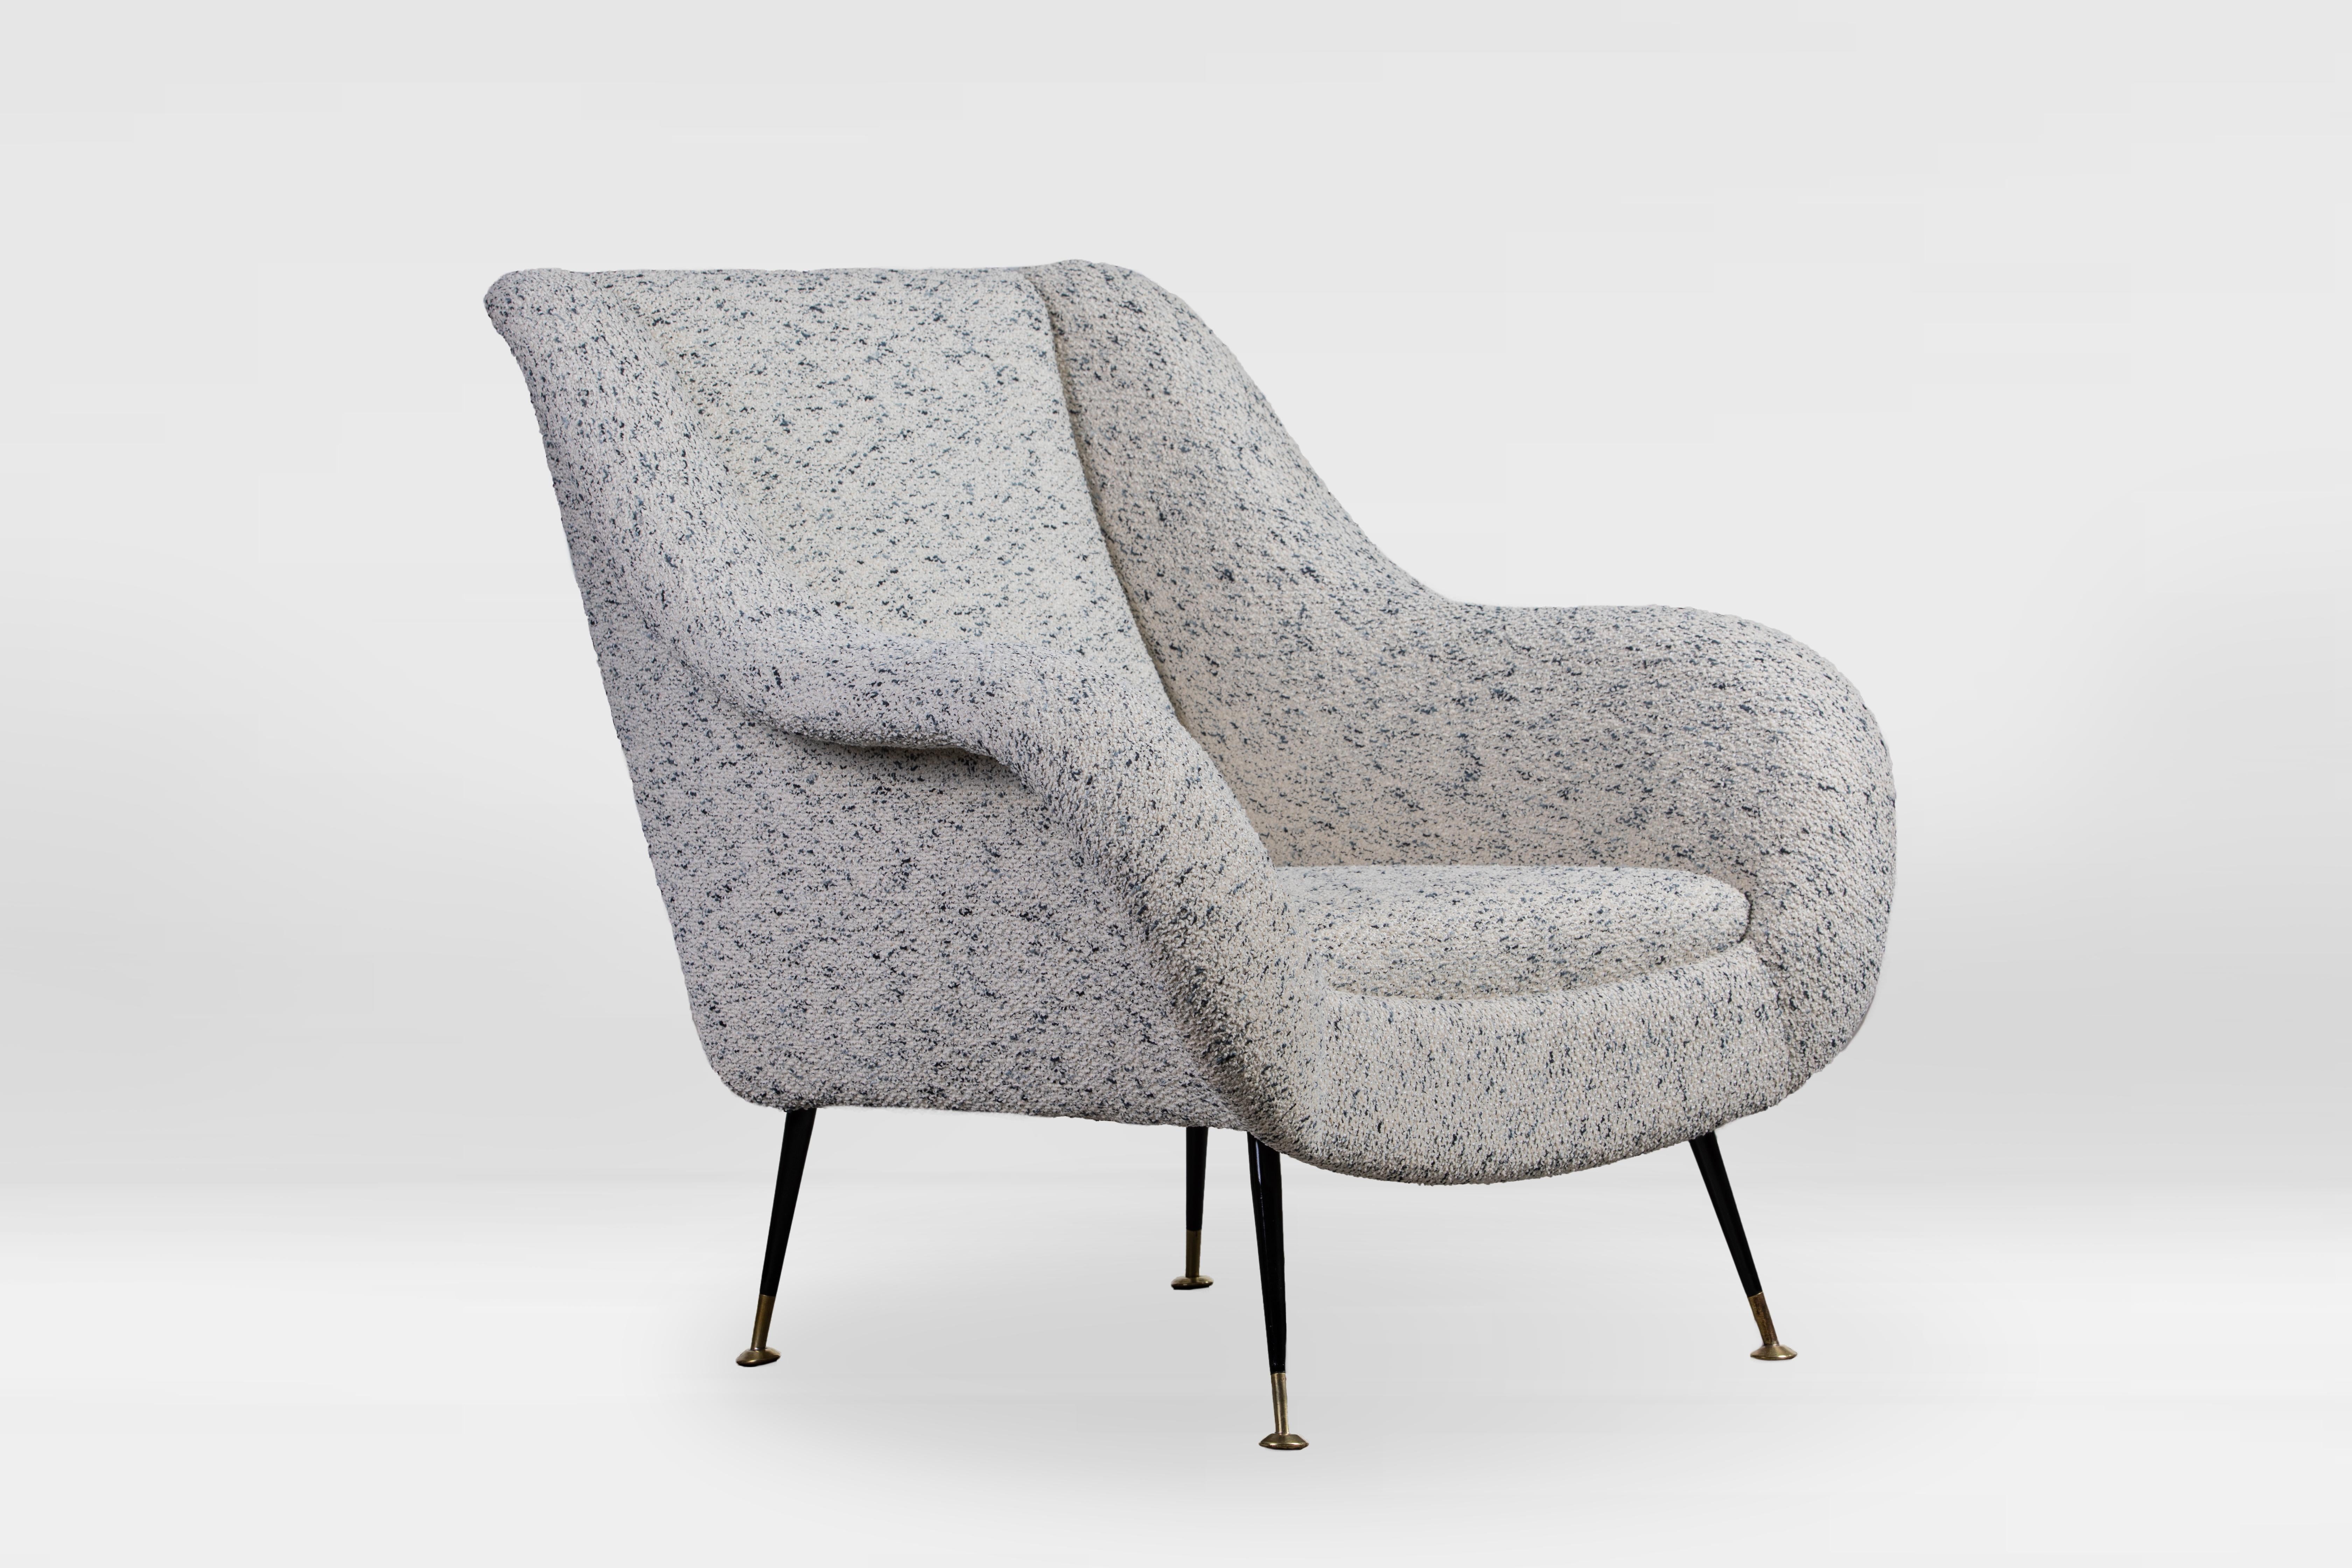 Italian Lounge Chair, Gigi Radice for Minotti, in Metaphores Bouclette For Sale 3